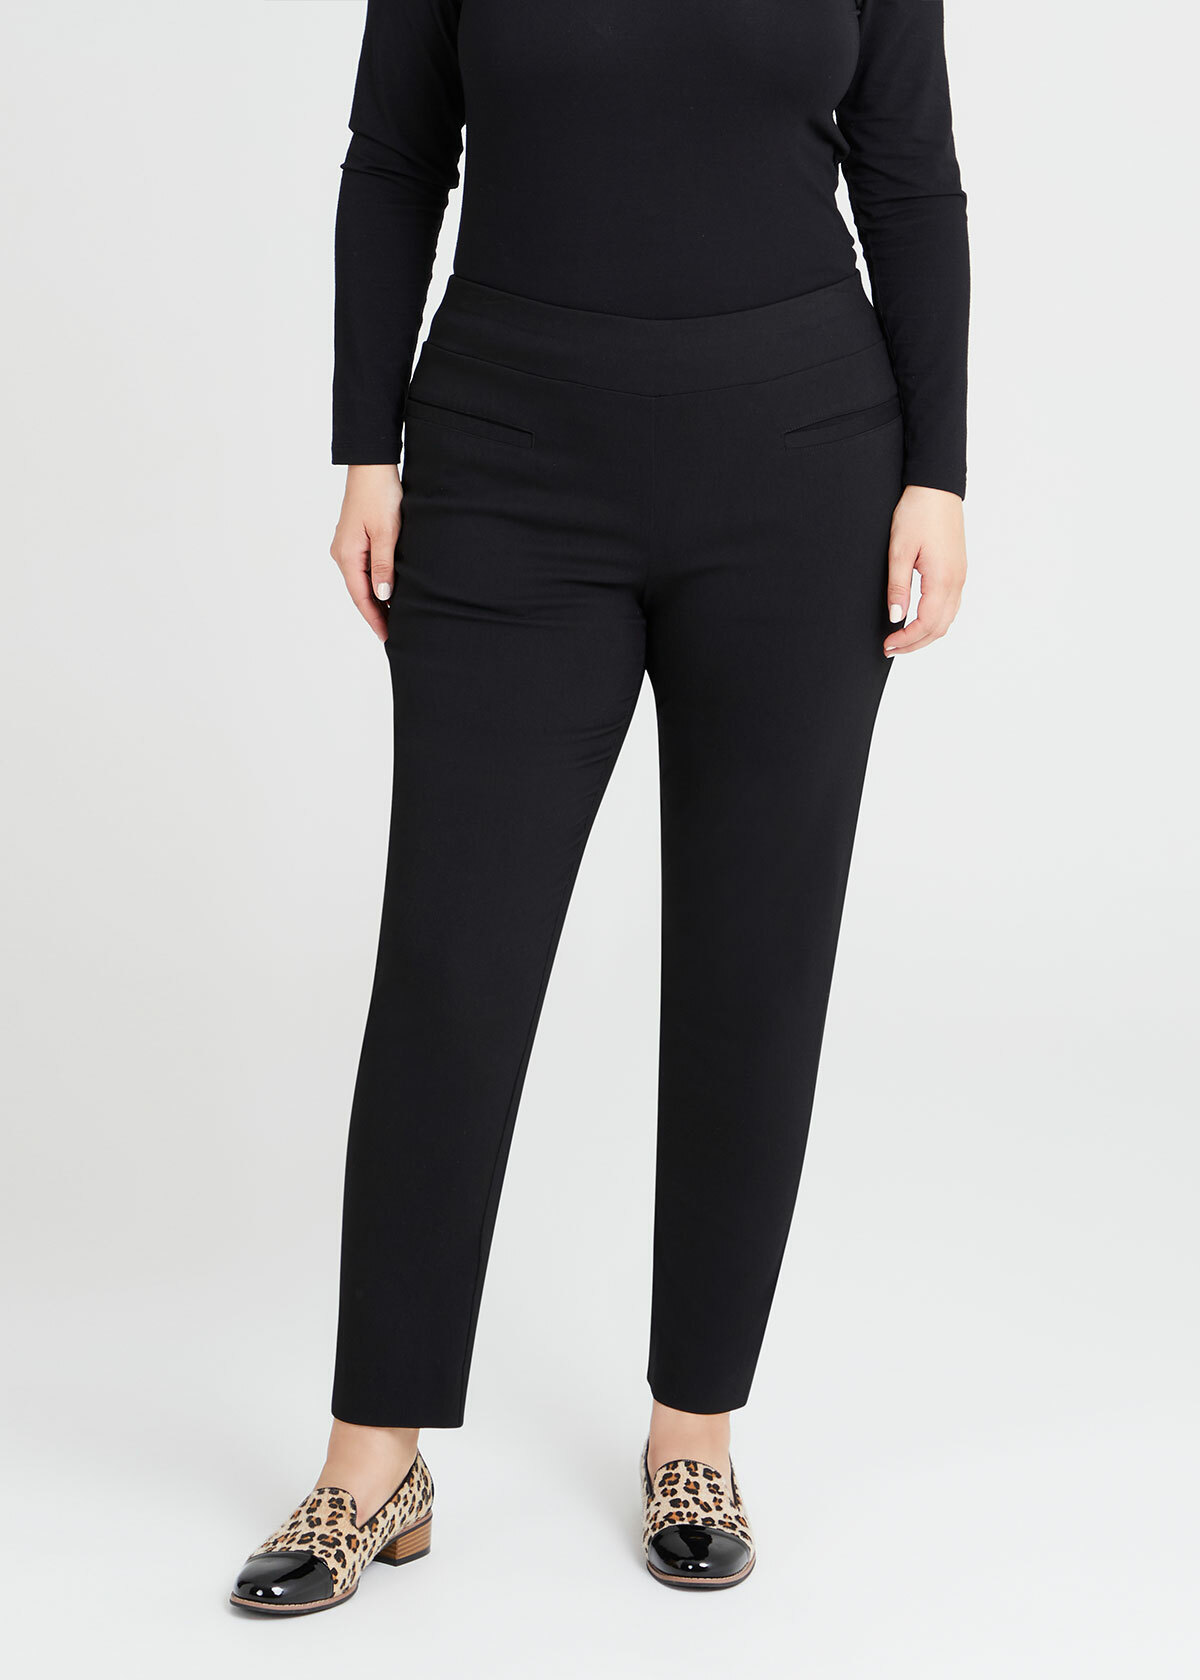 Shop Plus Size Entice Everyday Straight Leg Pant in Black | Taking Shape AU